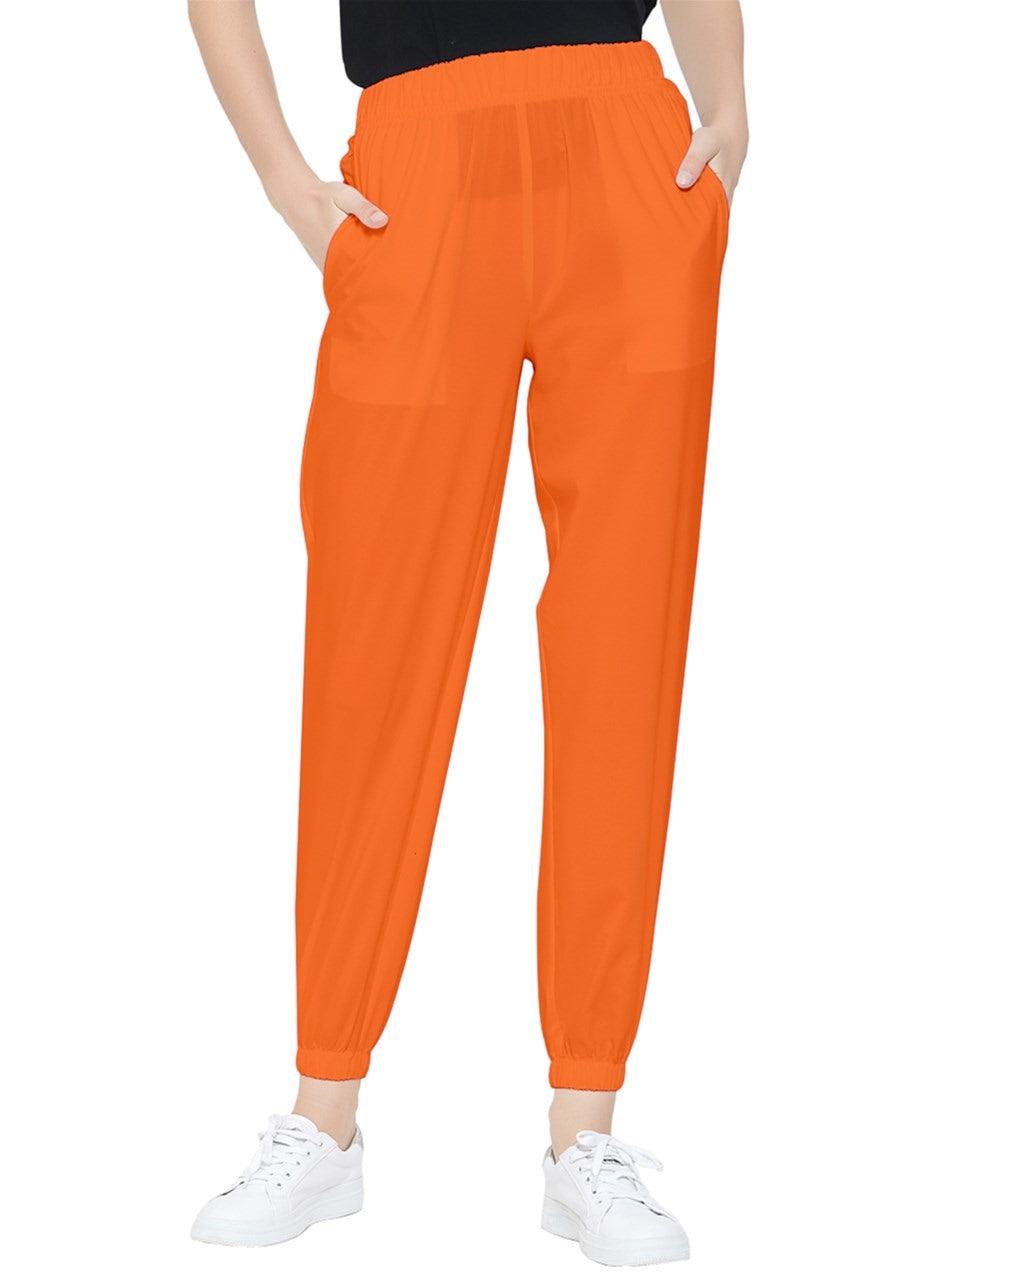 Mandra Orange Women's Pull On Mid-Rise Tapered Pants Trousers - Plus Size